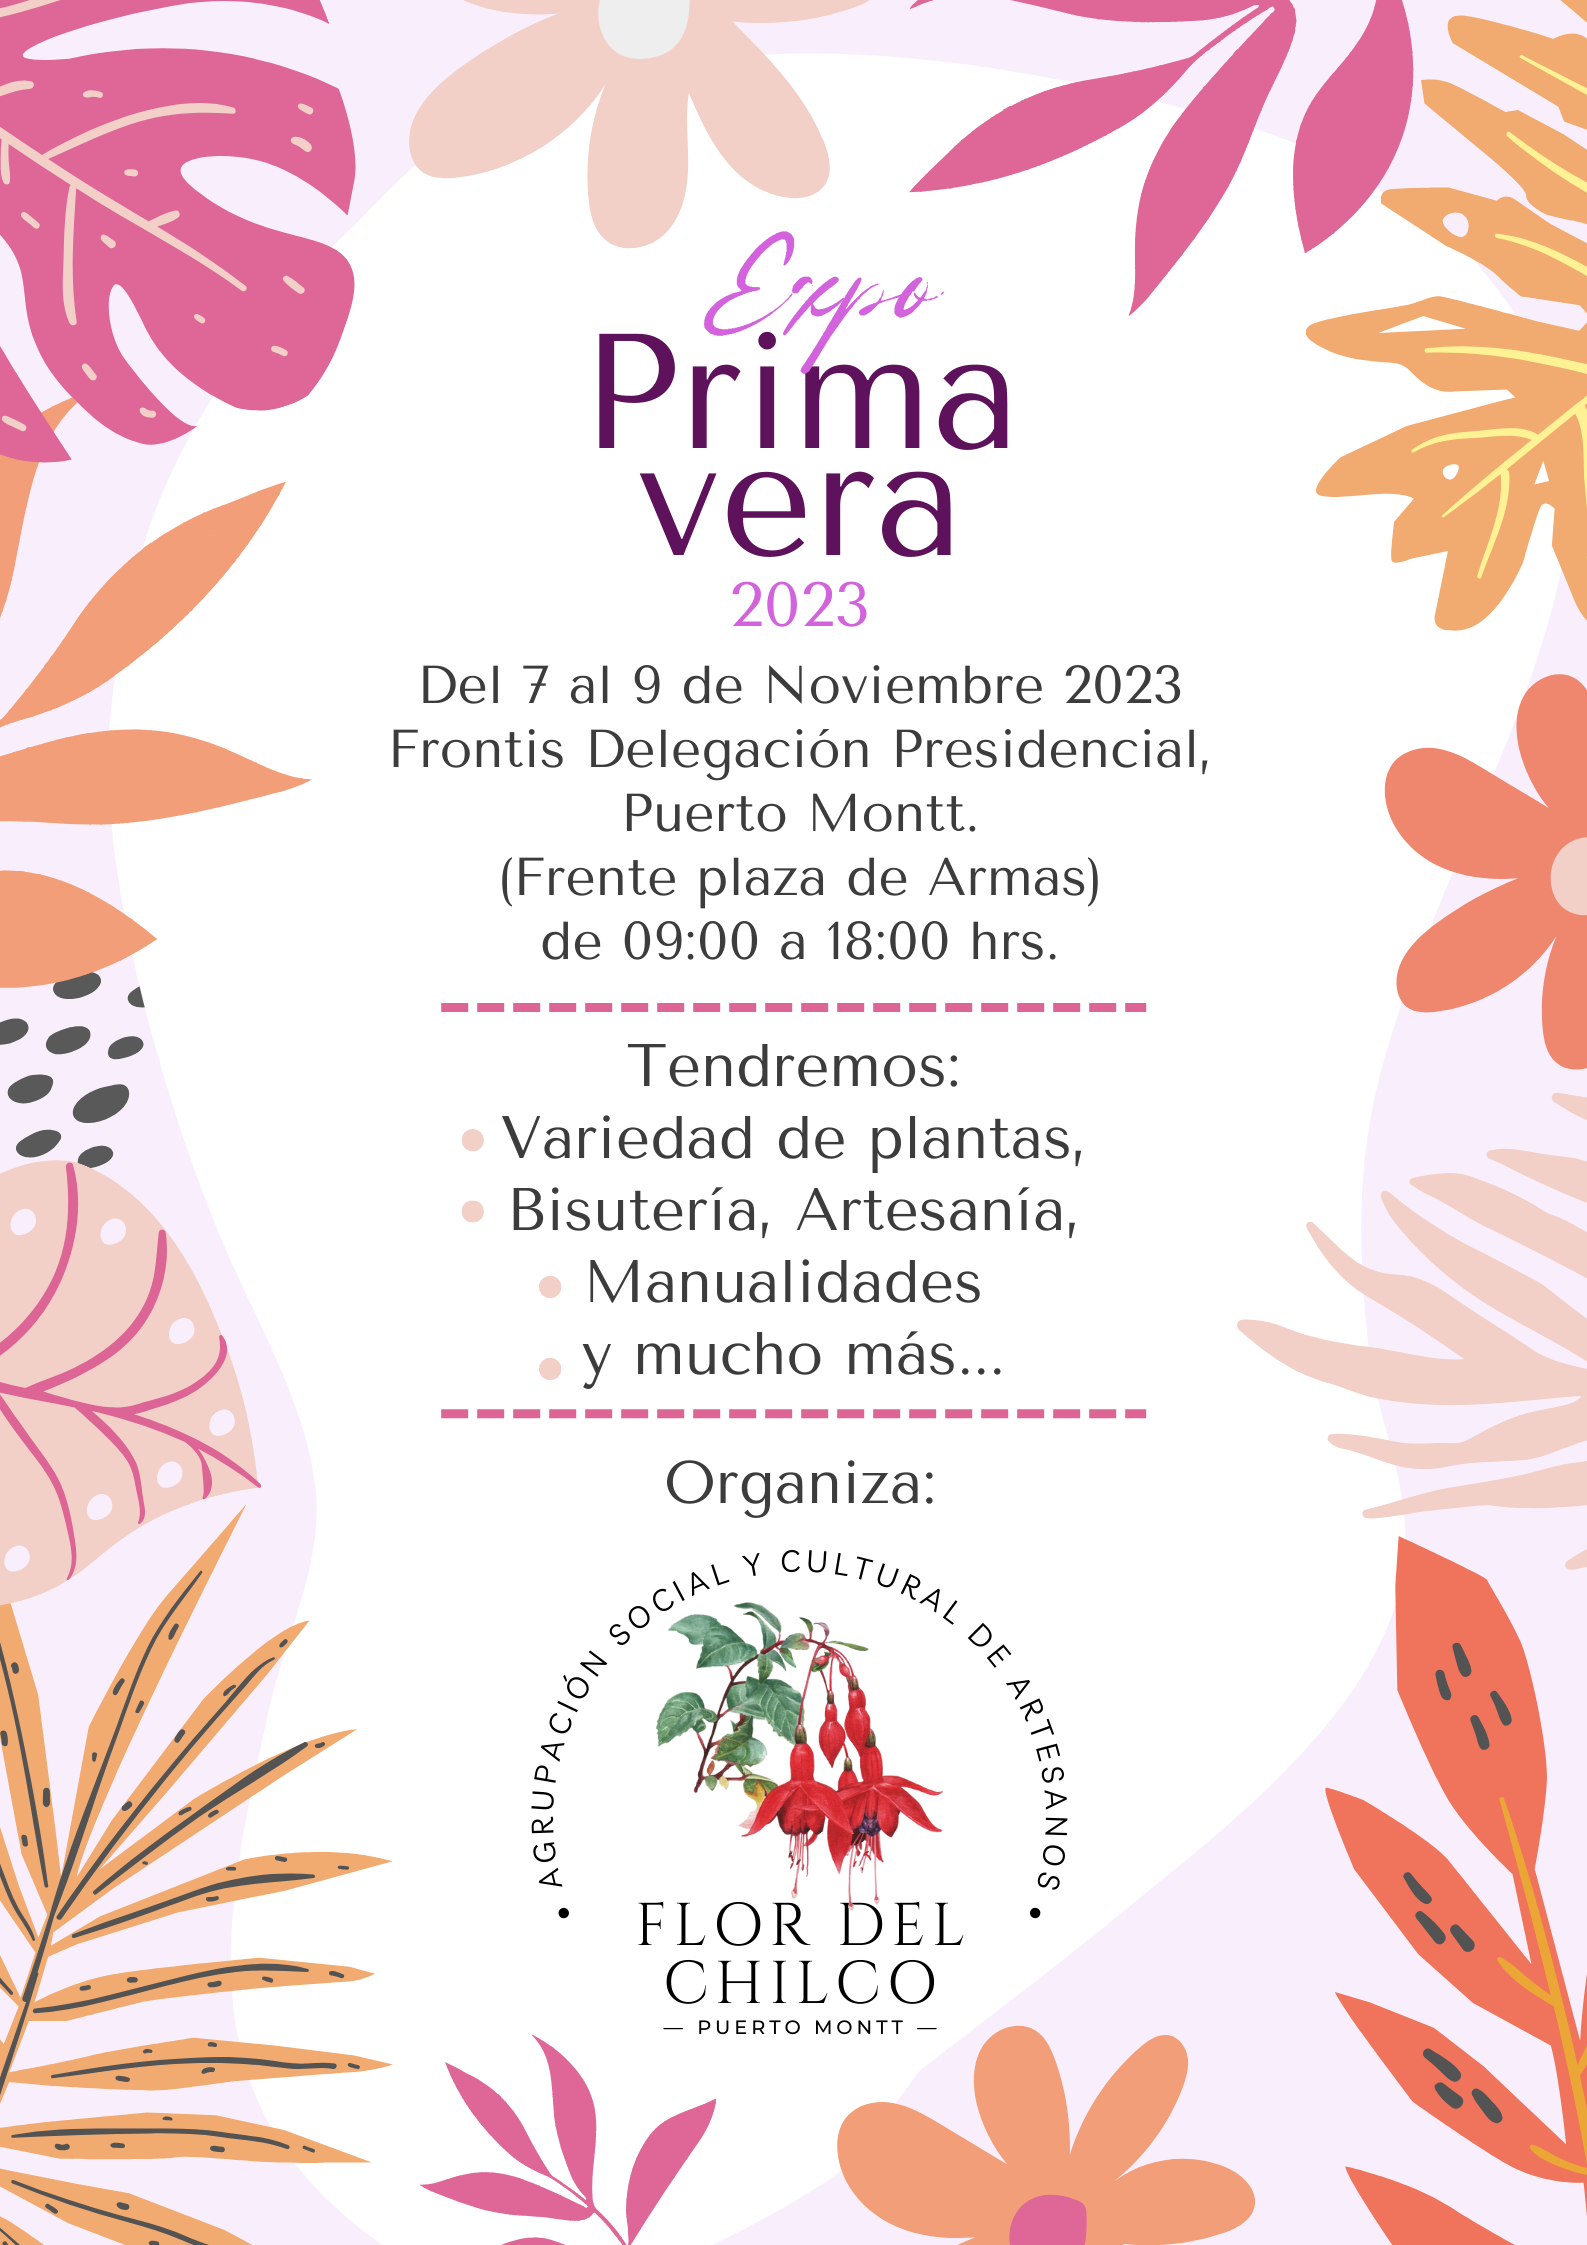 Expo Primavera 2023, Puerto Montt